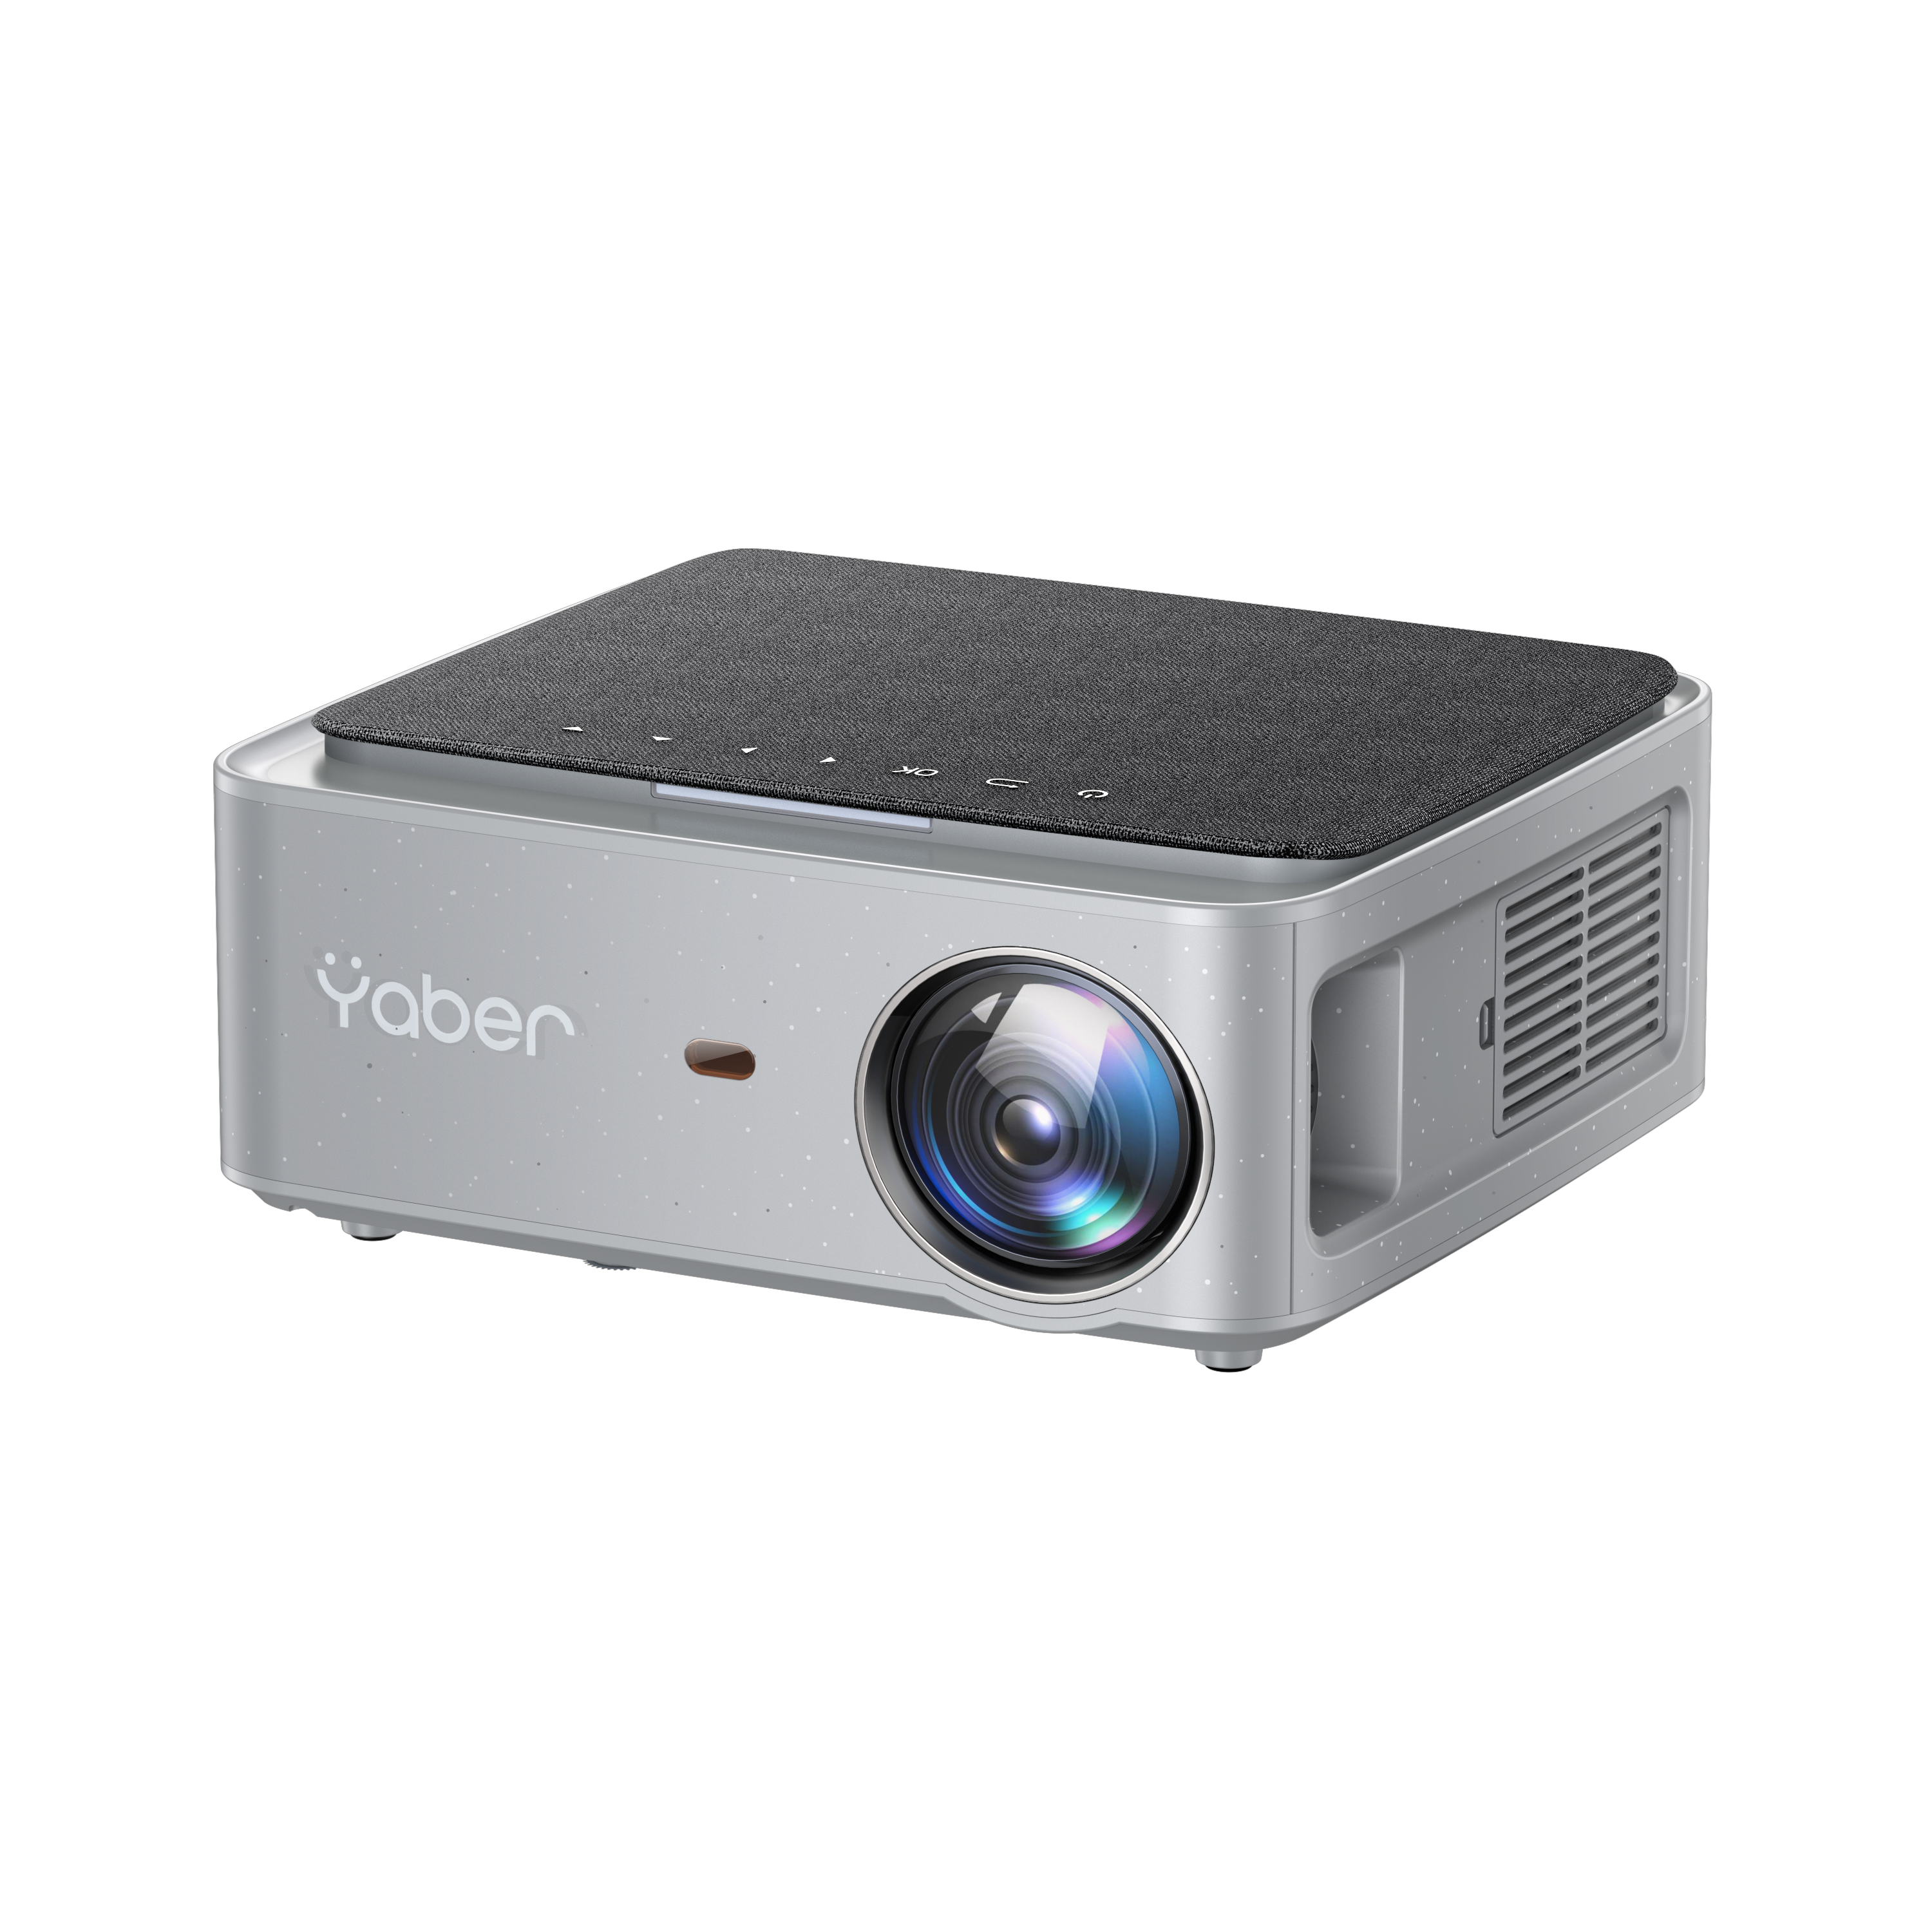 YABER PROJECTOR PRO U6 (AOSP) - YABER Entertainment Projector